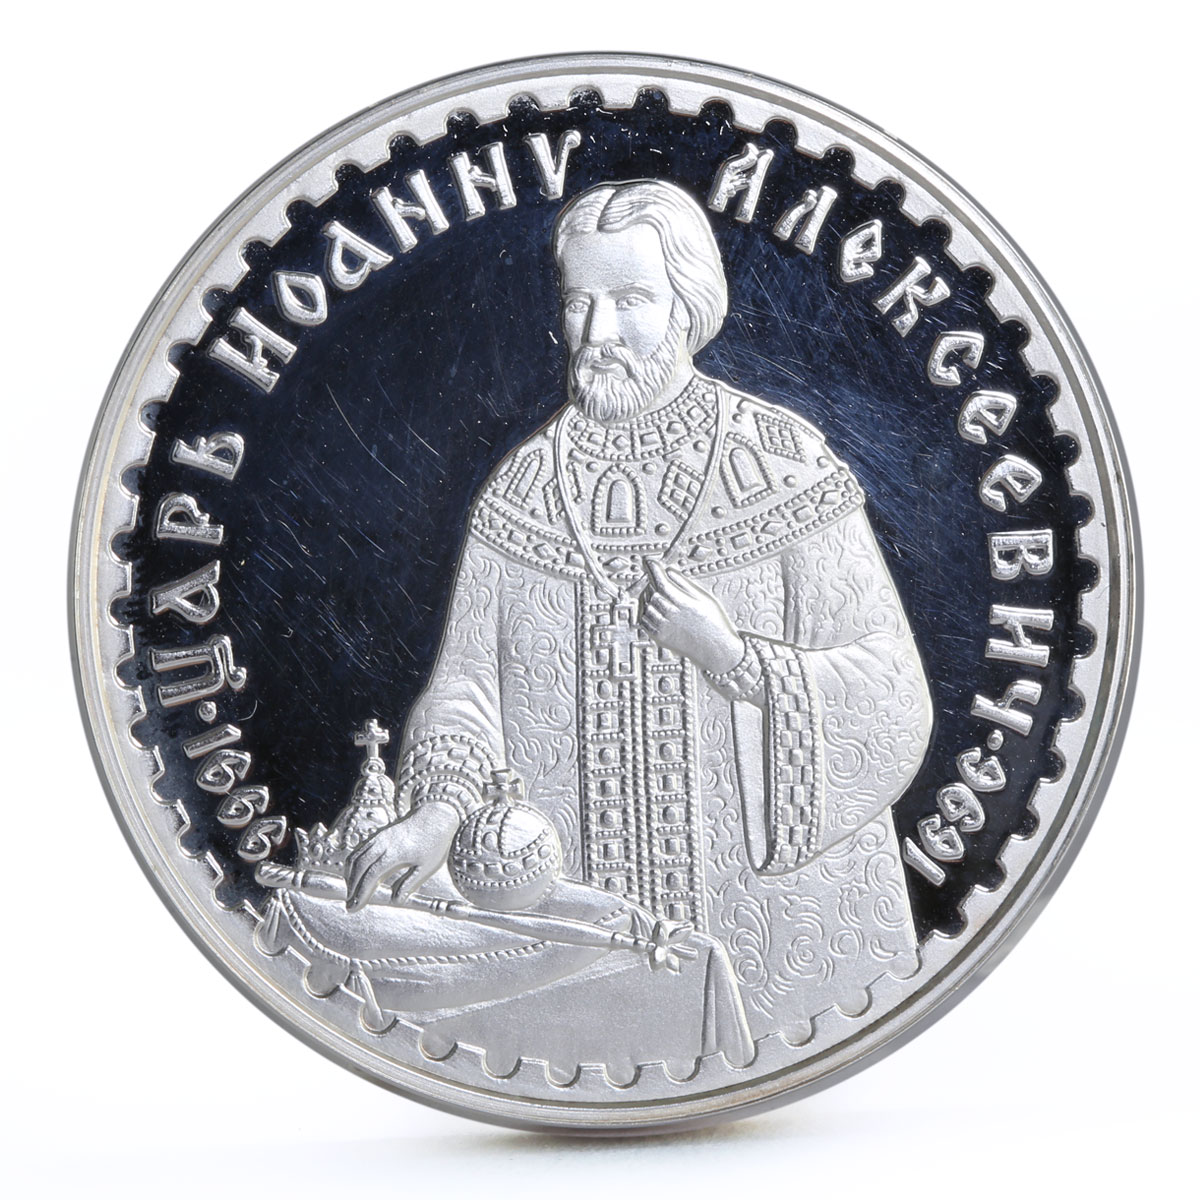 Russia Russian Tsars series Ioann Alexeevich proof silver medal